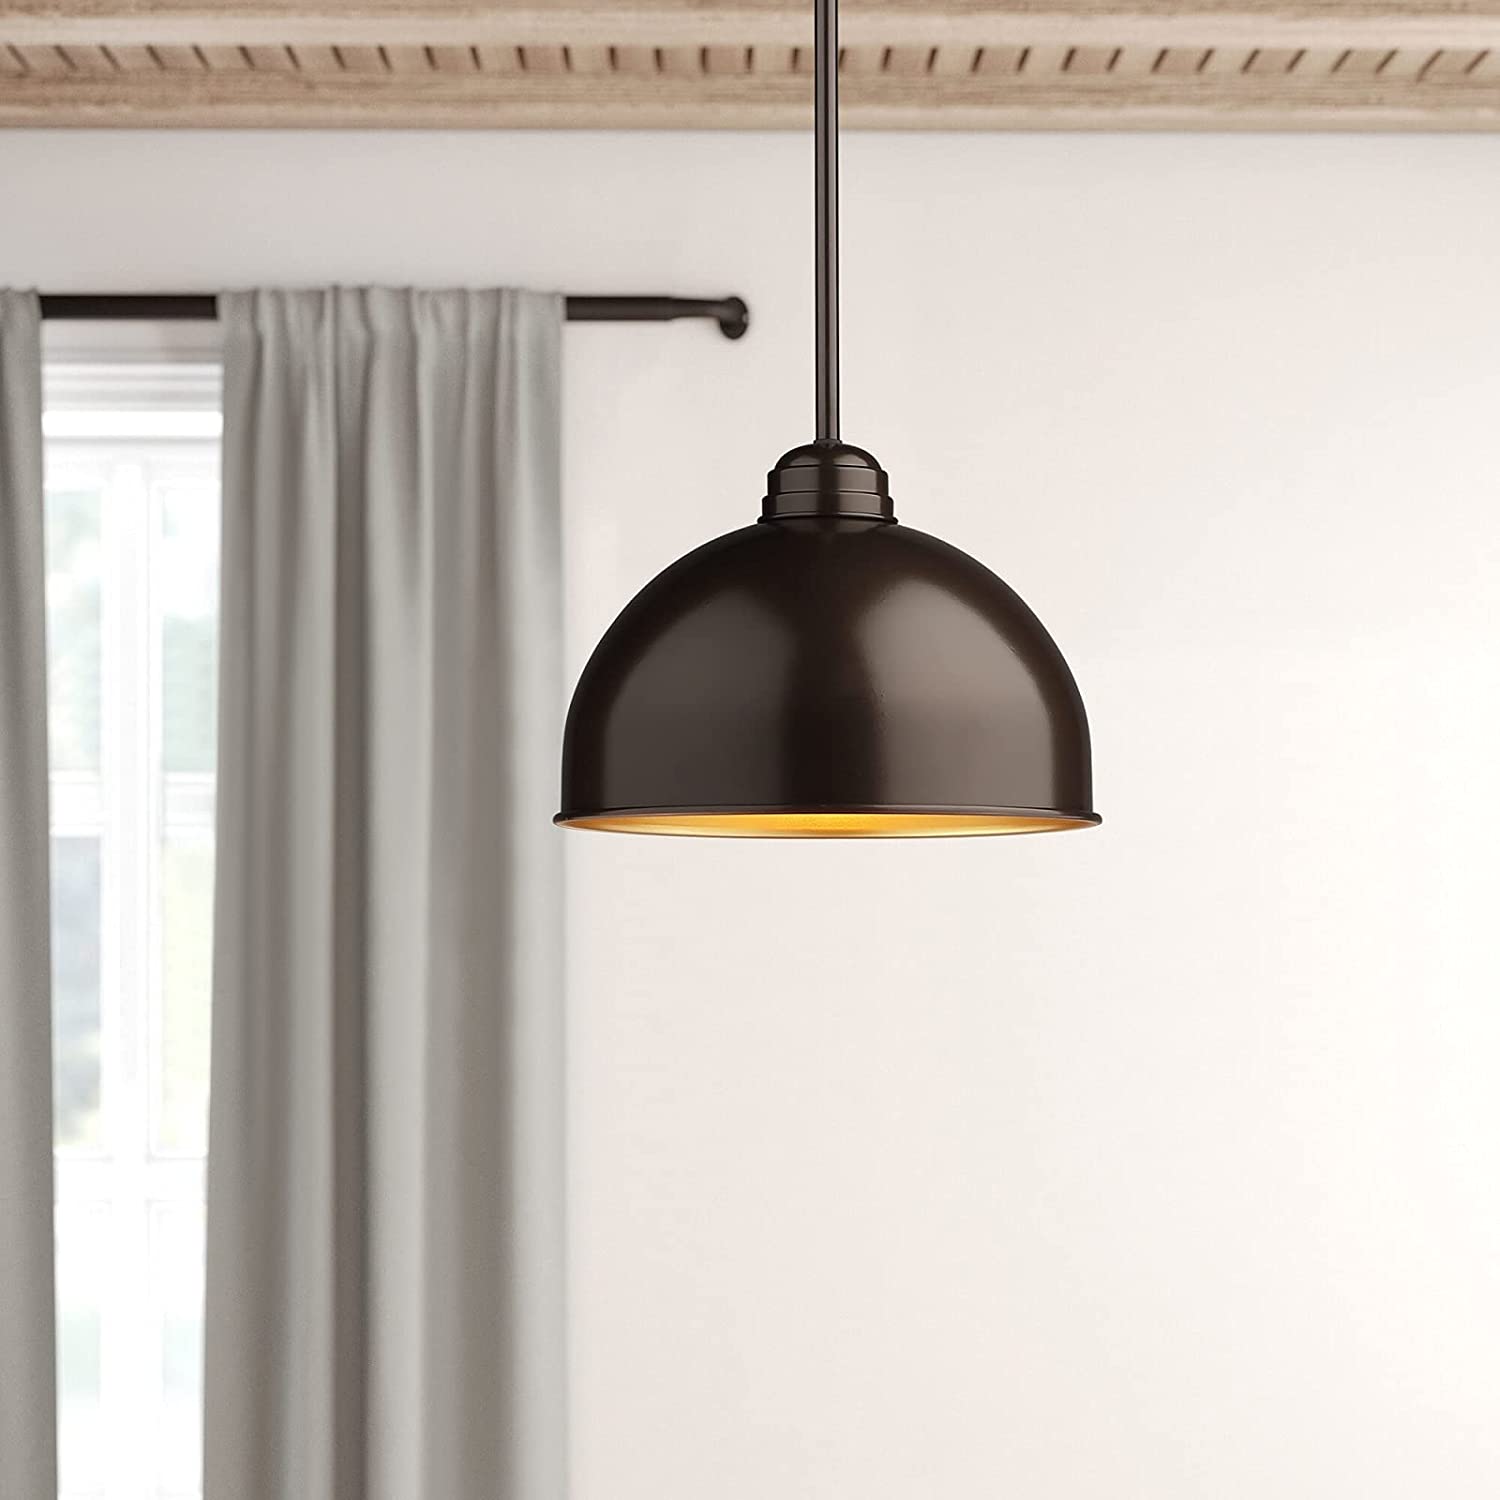 Farmhouse pendant lighting for kitchen island black pendant light fixtures